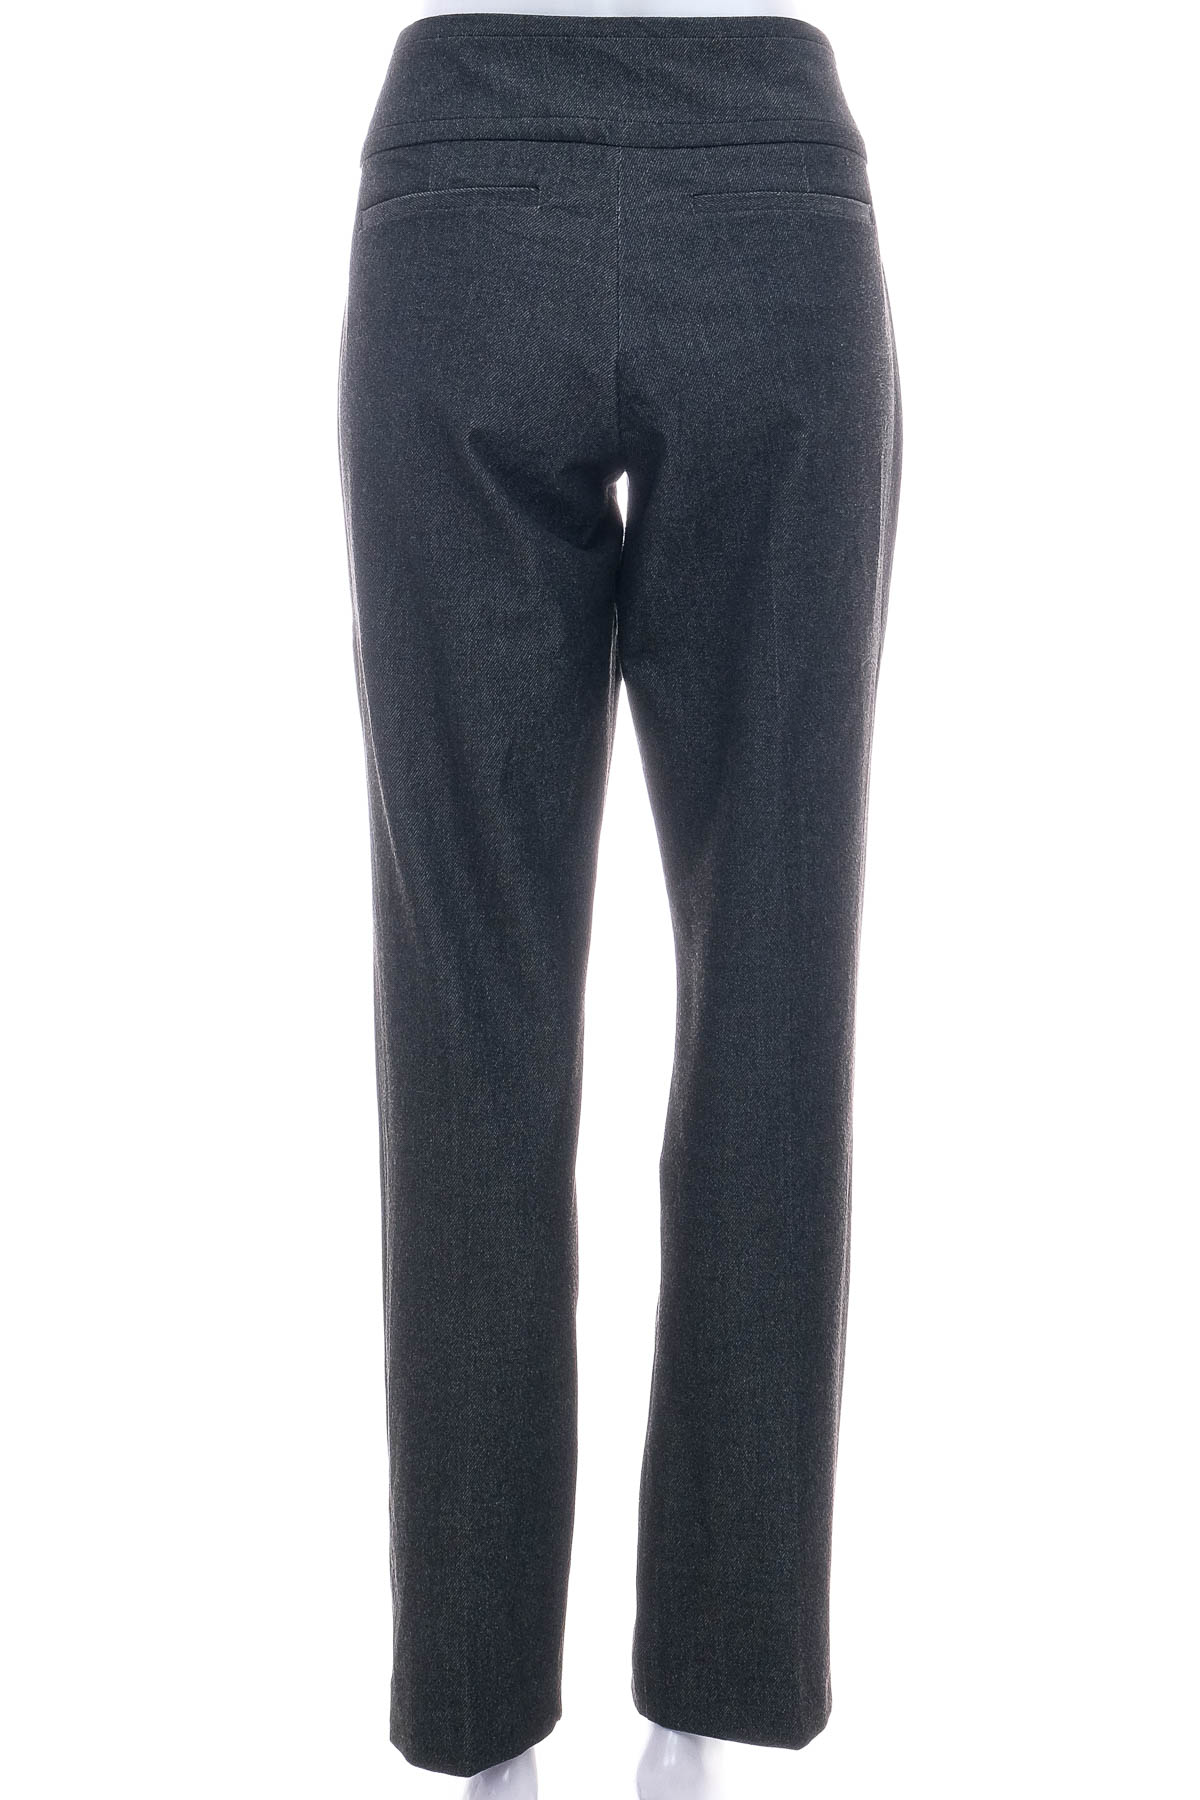 Pantaloni de damă - New York & Company - 1